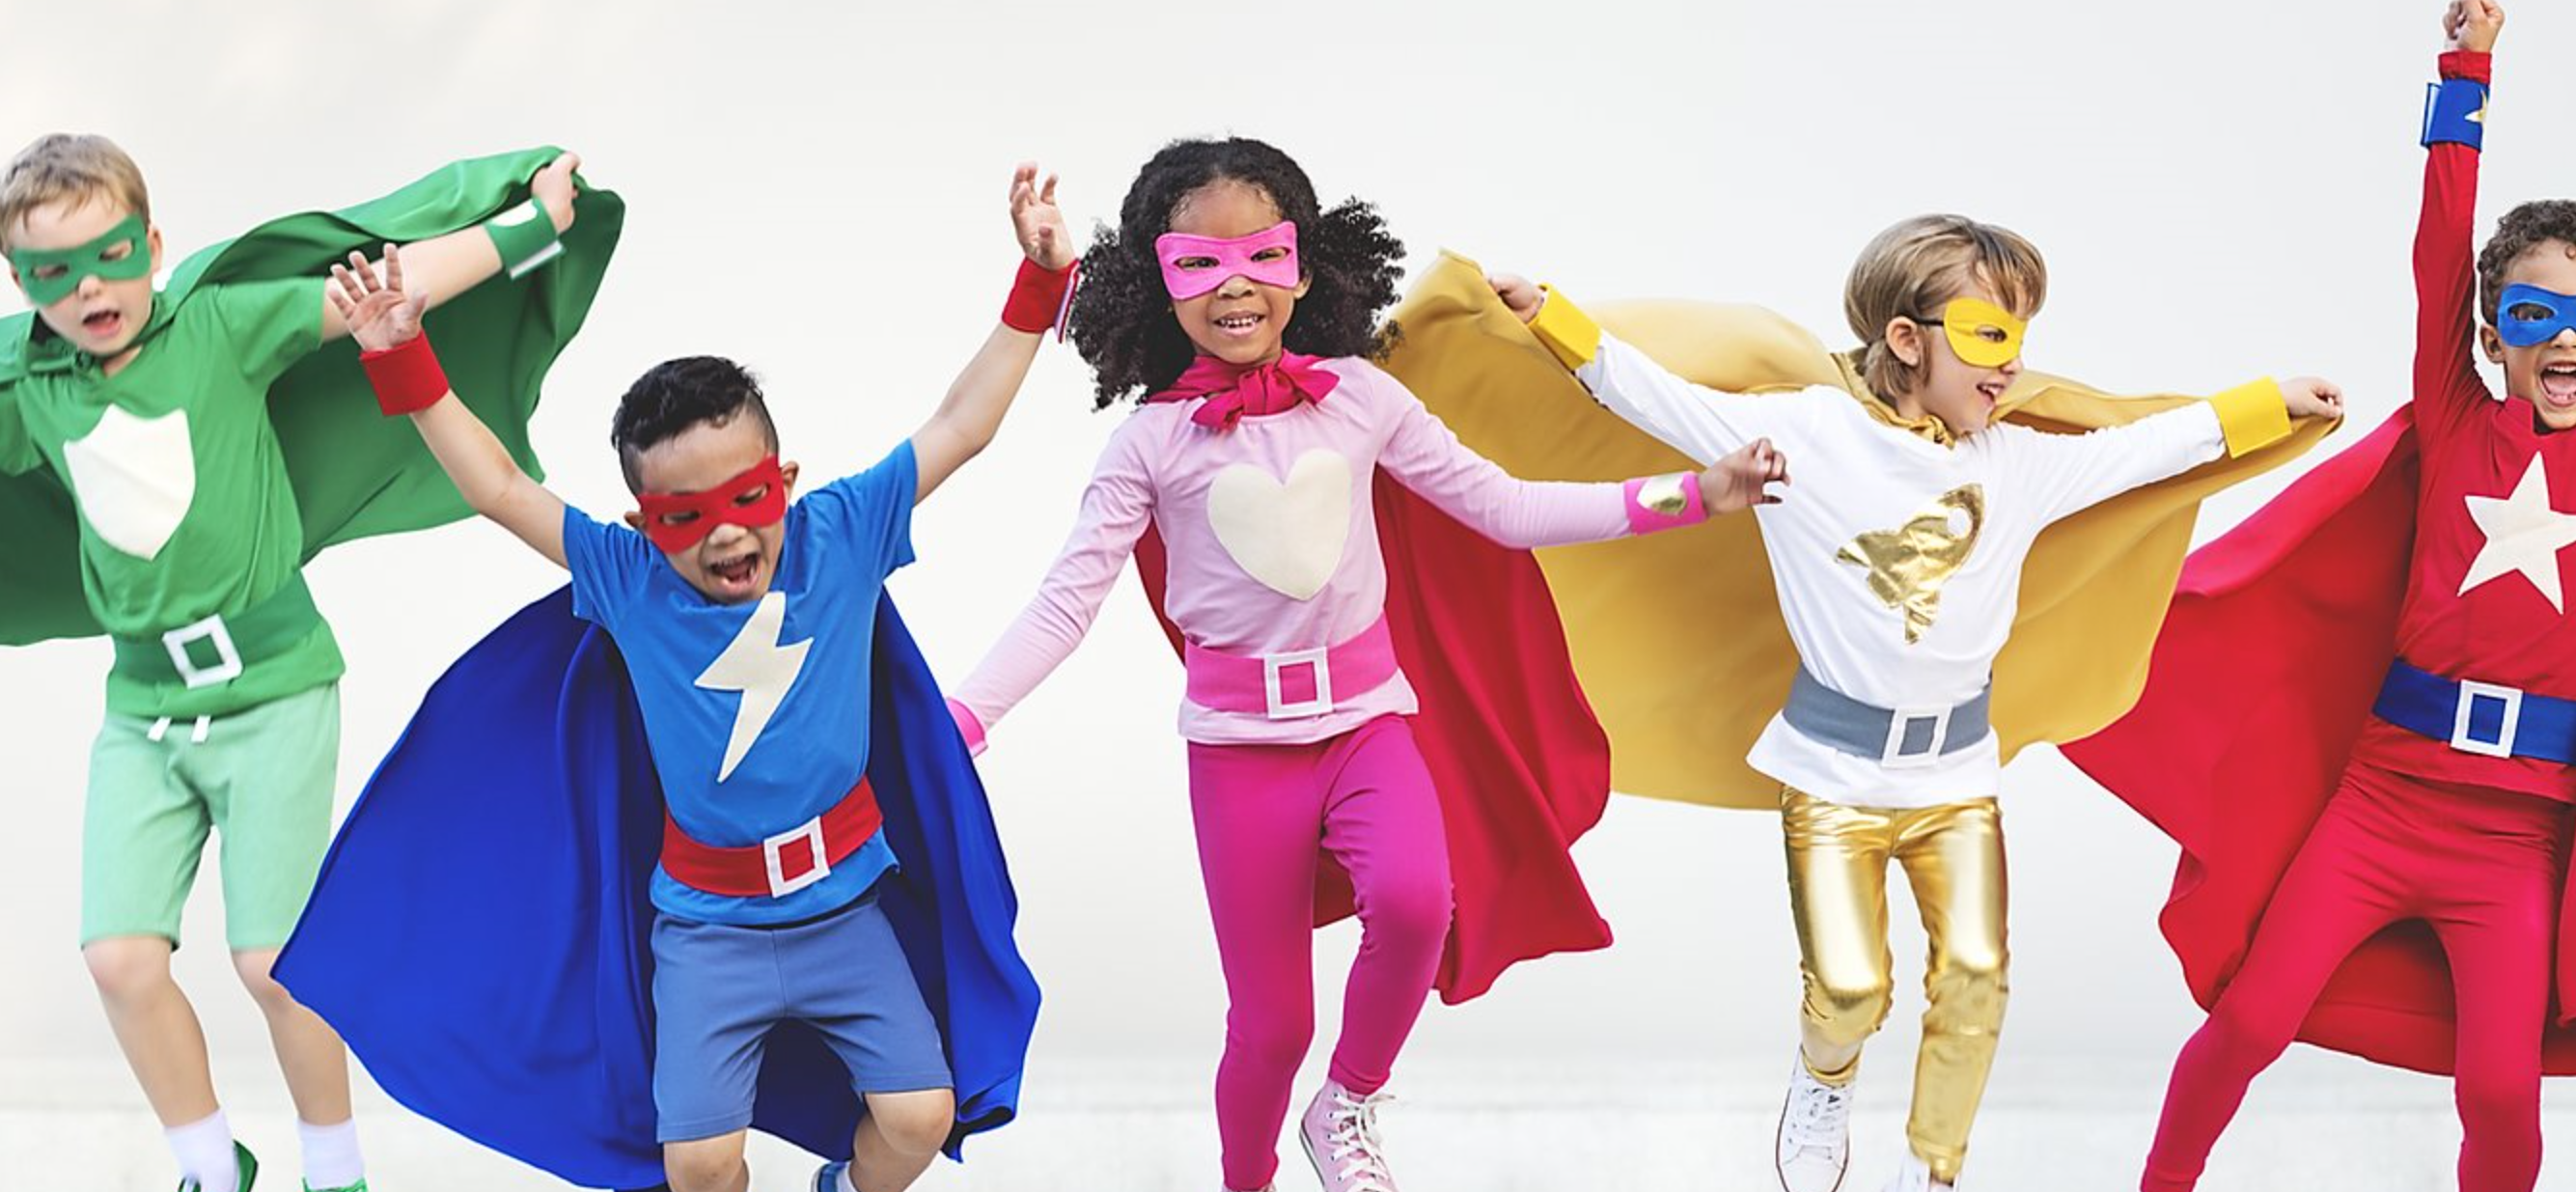 Children jumping in superhero costumes